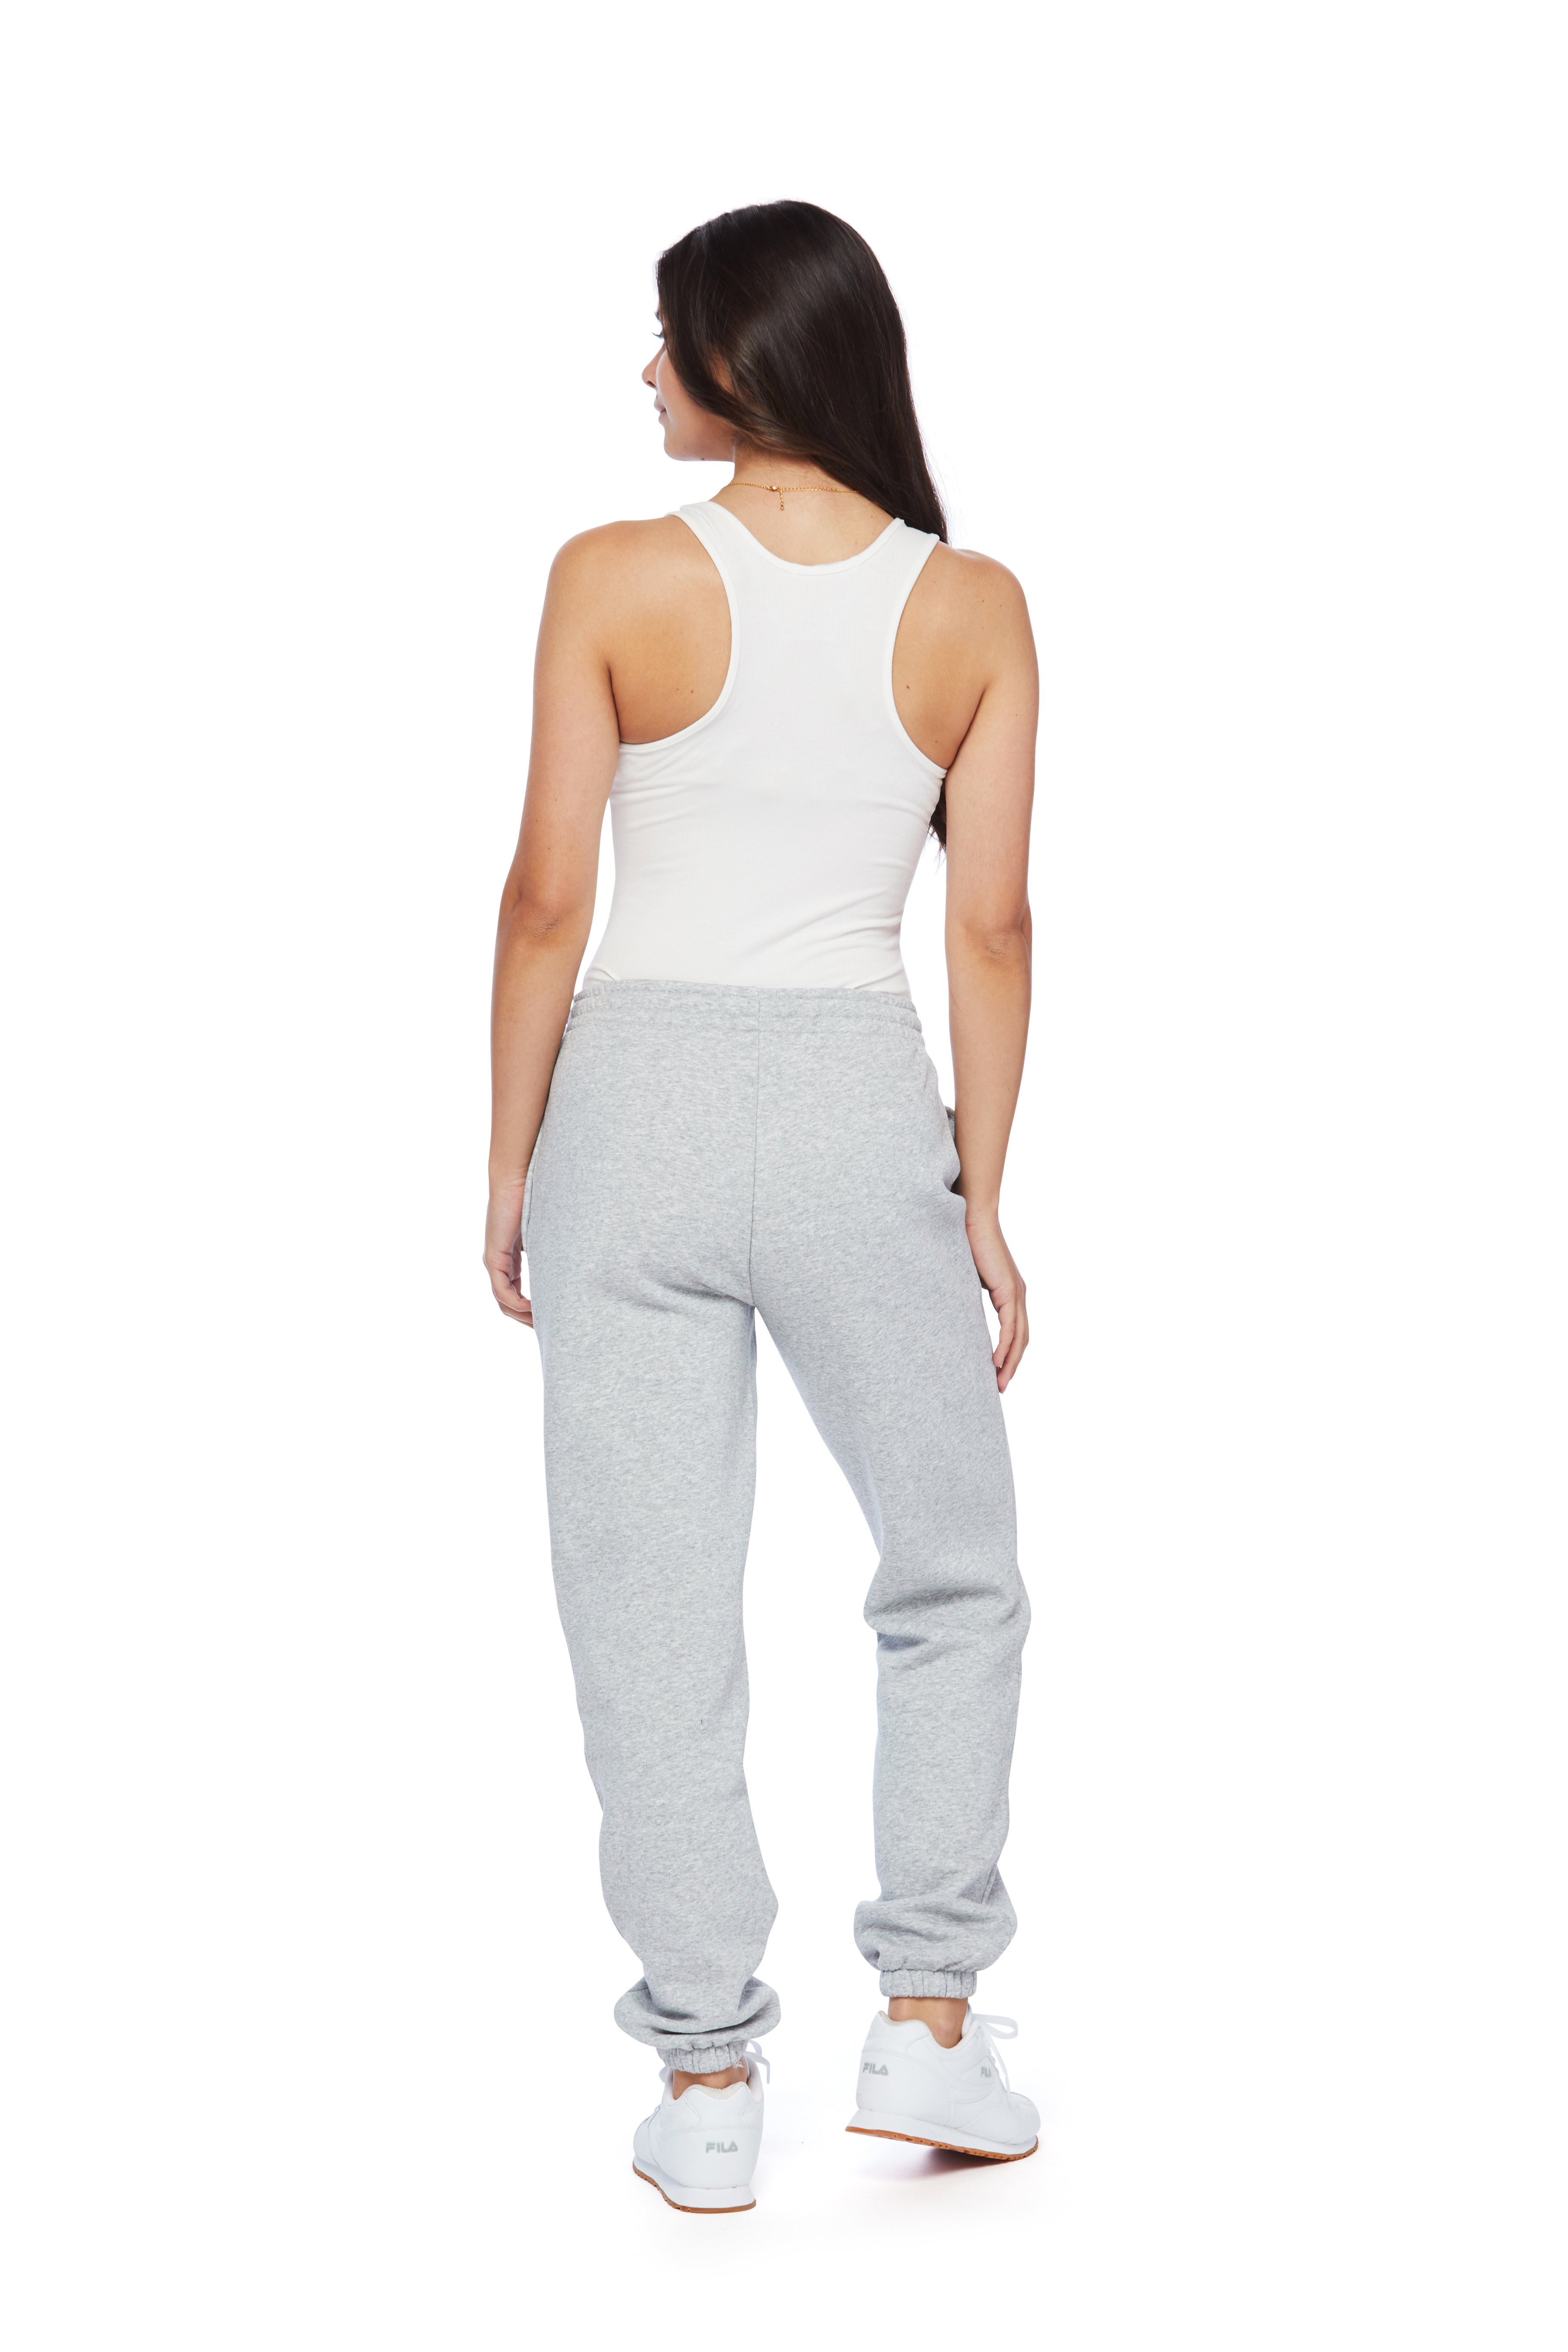 FILA Women's Hthr Gray Sweatpants Size Small S Lounge Joggers Pockets Cuffed